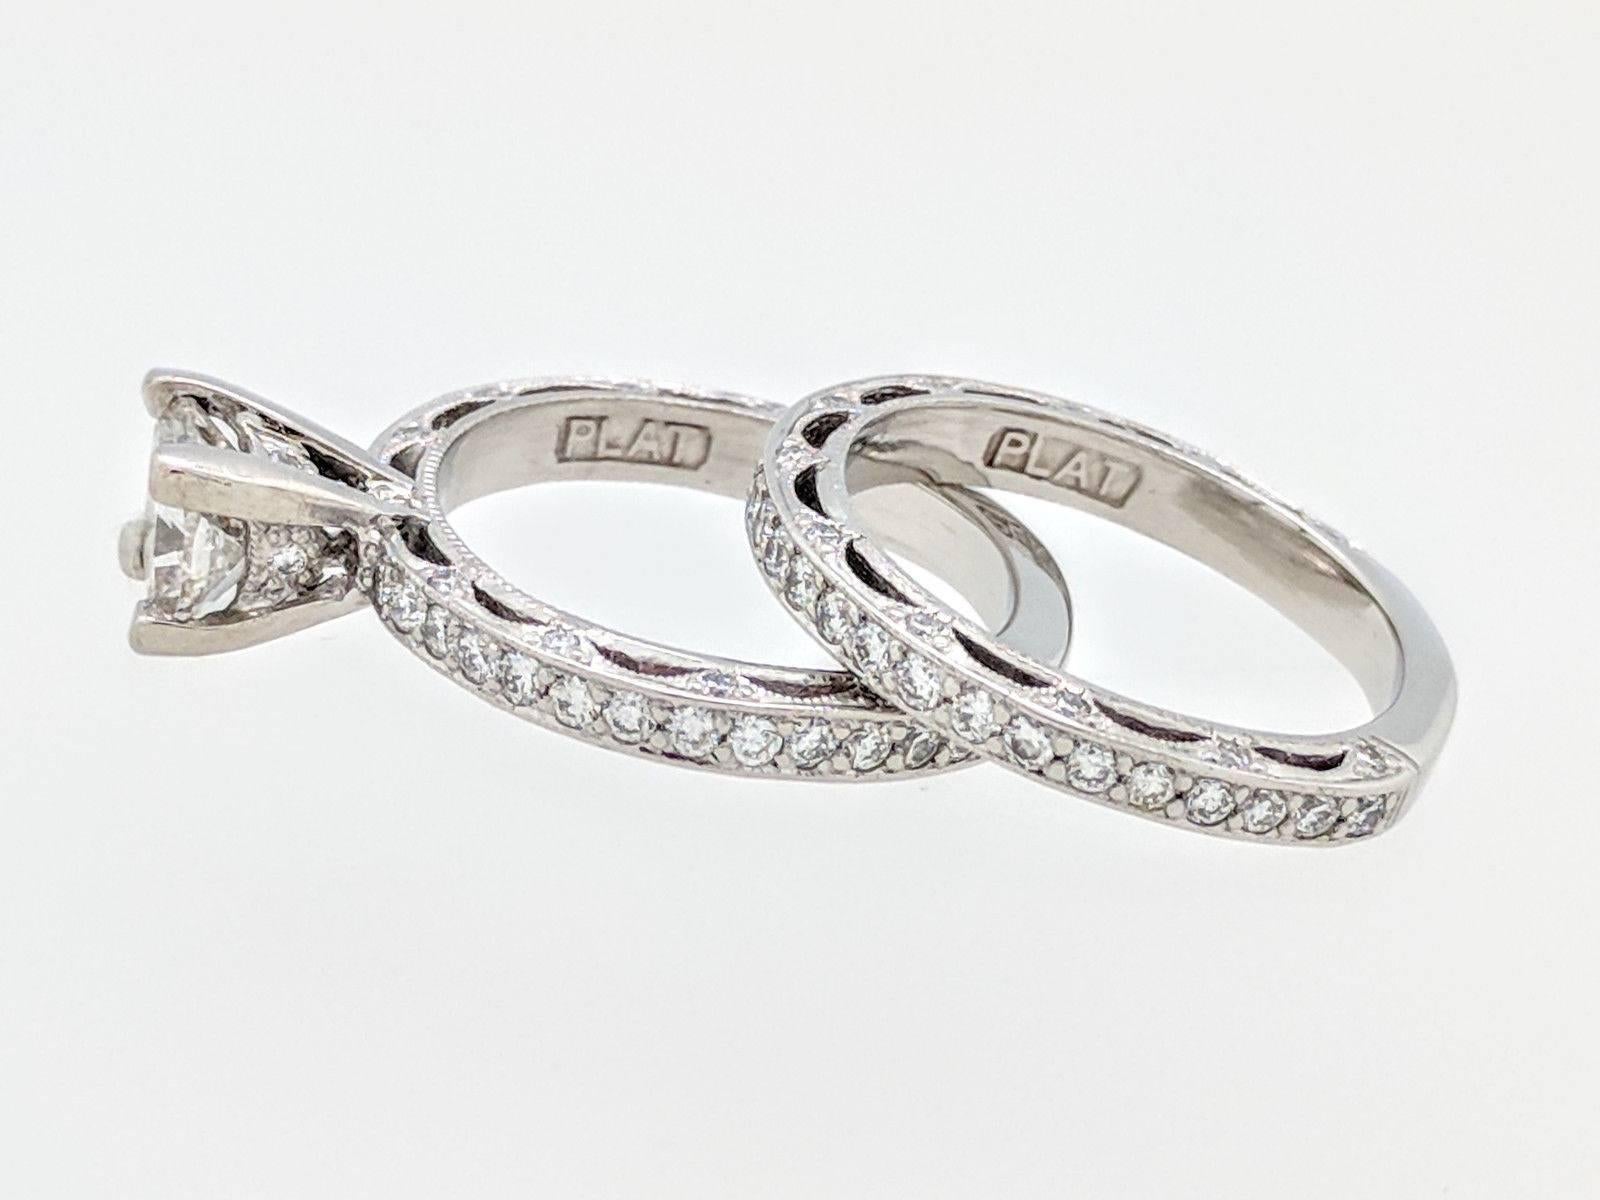 Platinum Tacori 1.05ct Cushion Cut Diamond Engagement Ring, Matching Band SI1/G 7